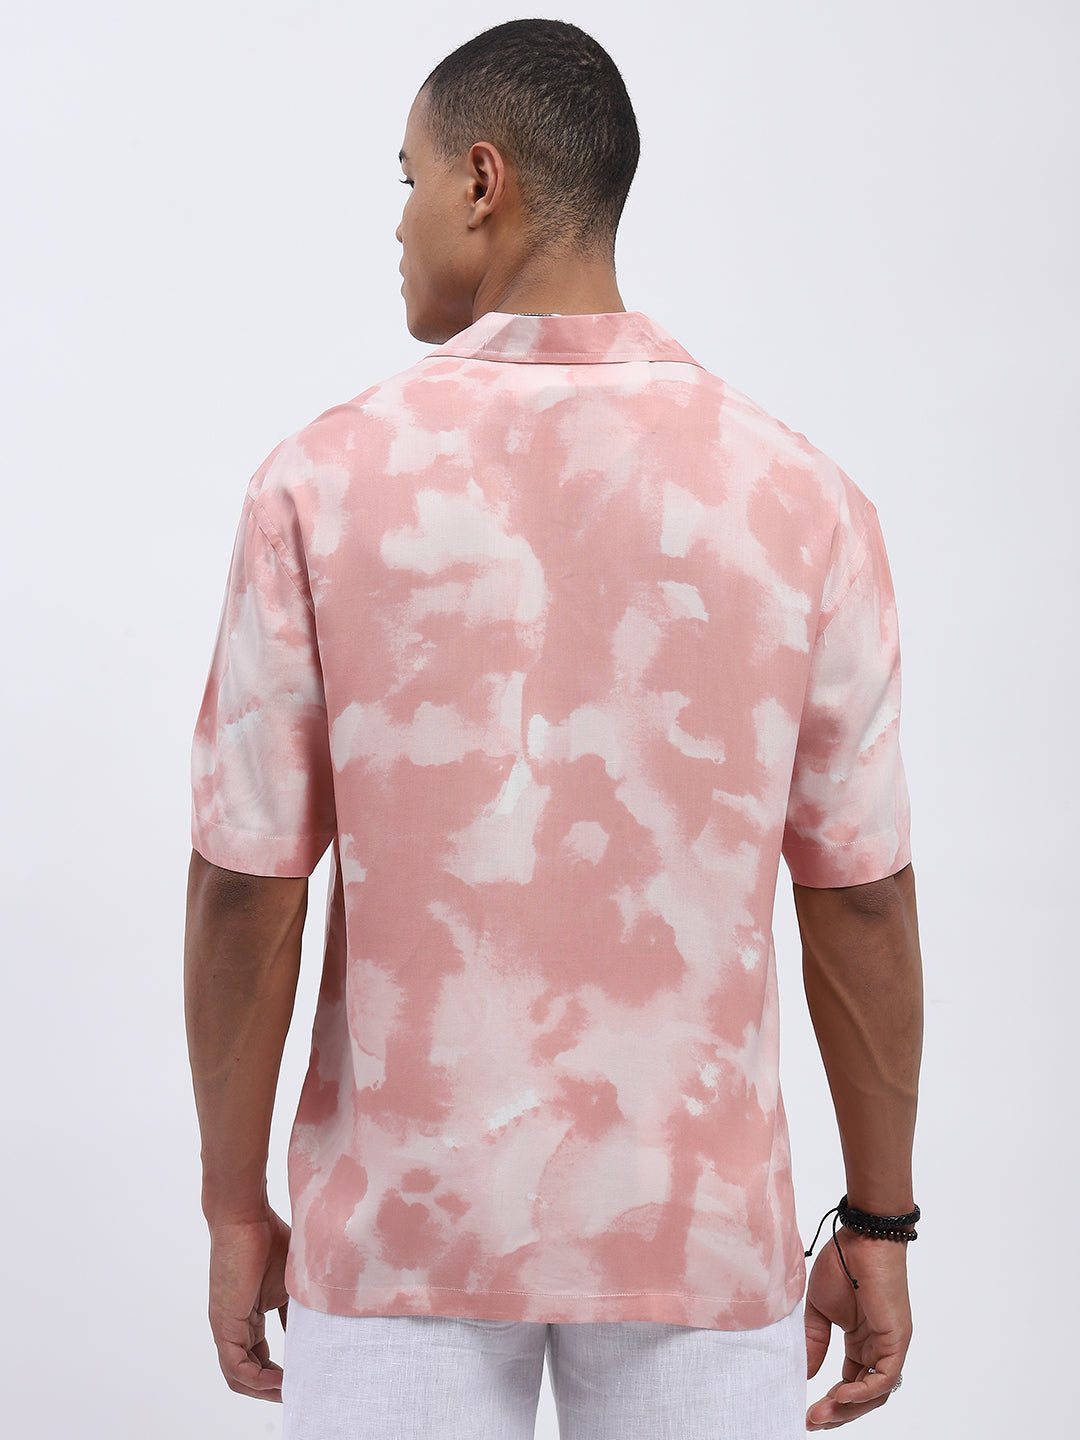 Peach Tie-Dye Men's Resort Shirt